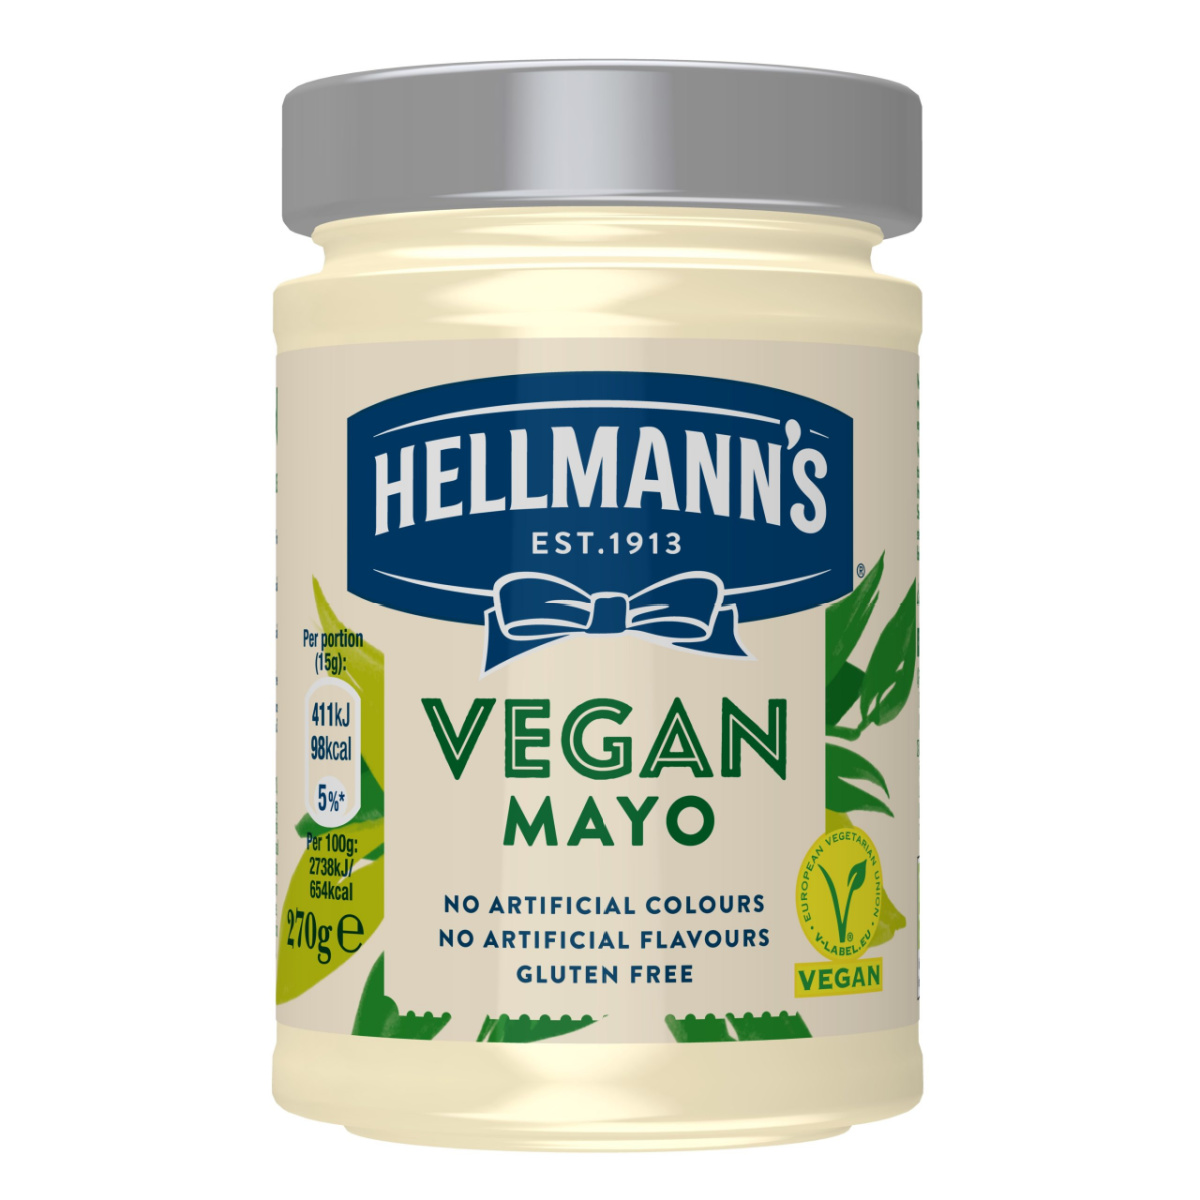 Jar of vegan Helmann's mayo, a vegan cupboard staple